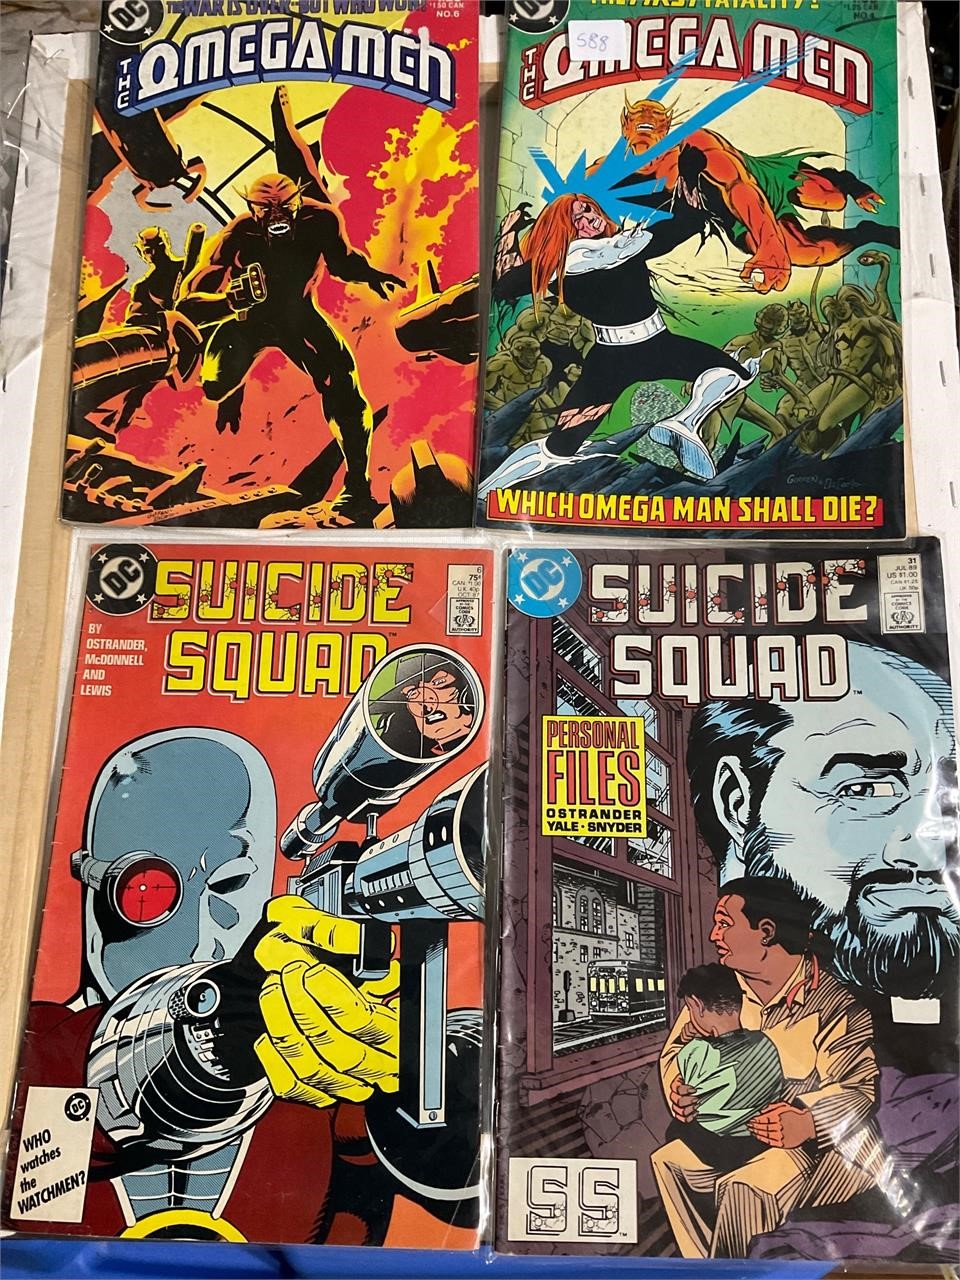 Omega man and suicide squad vintage comics